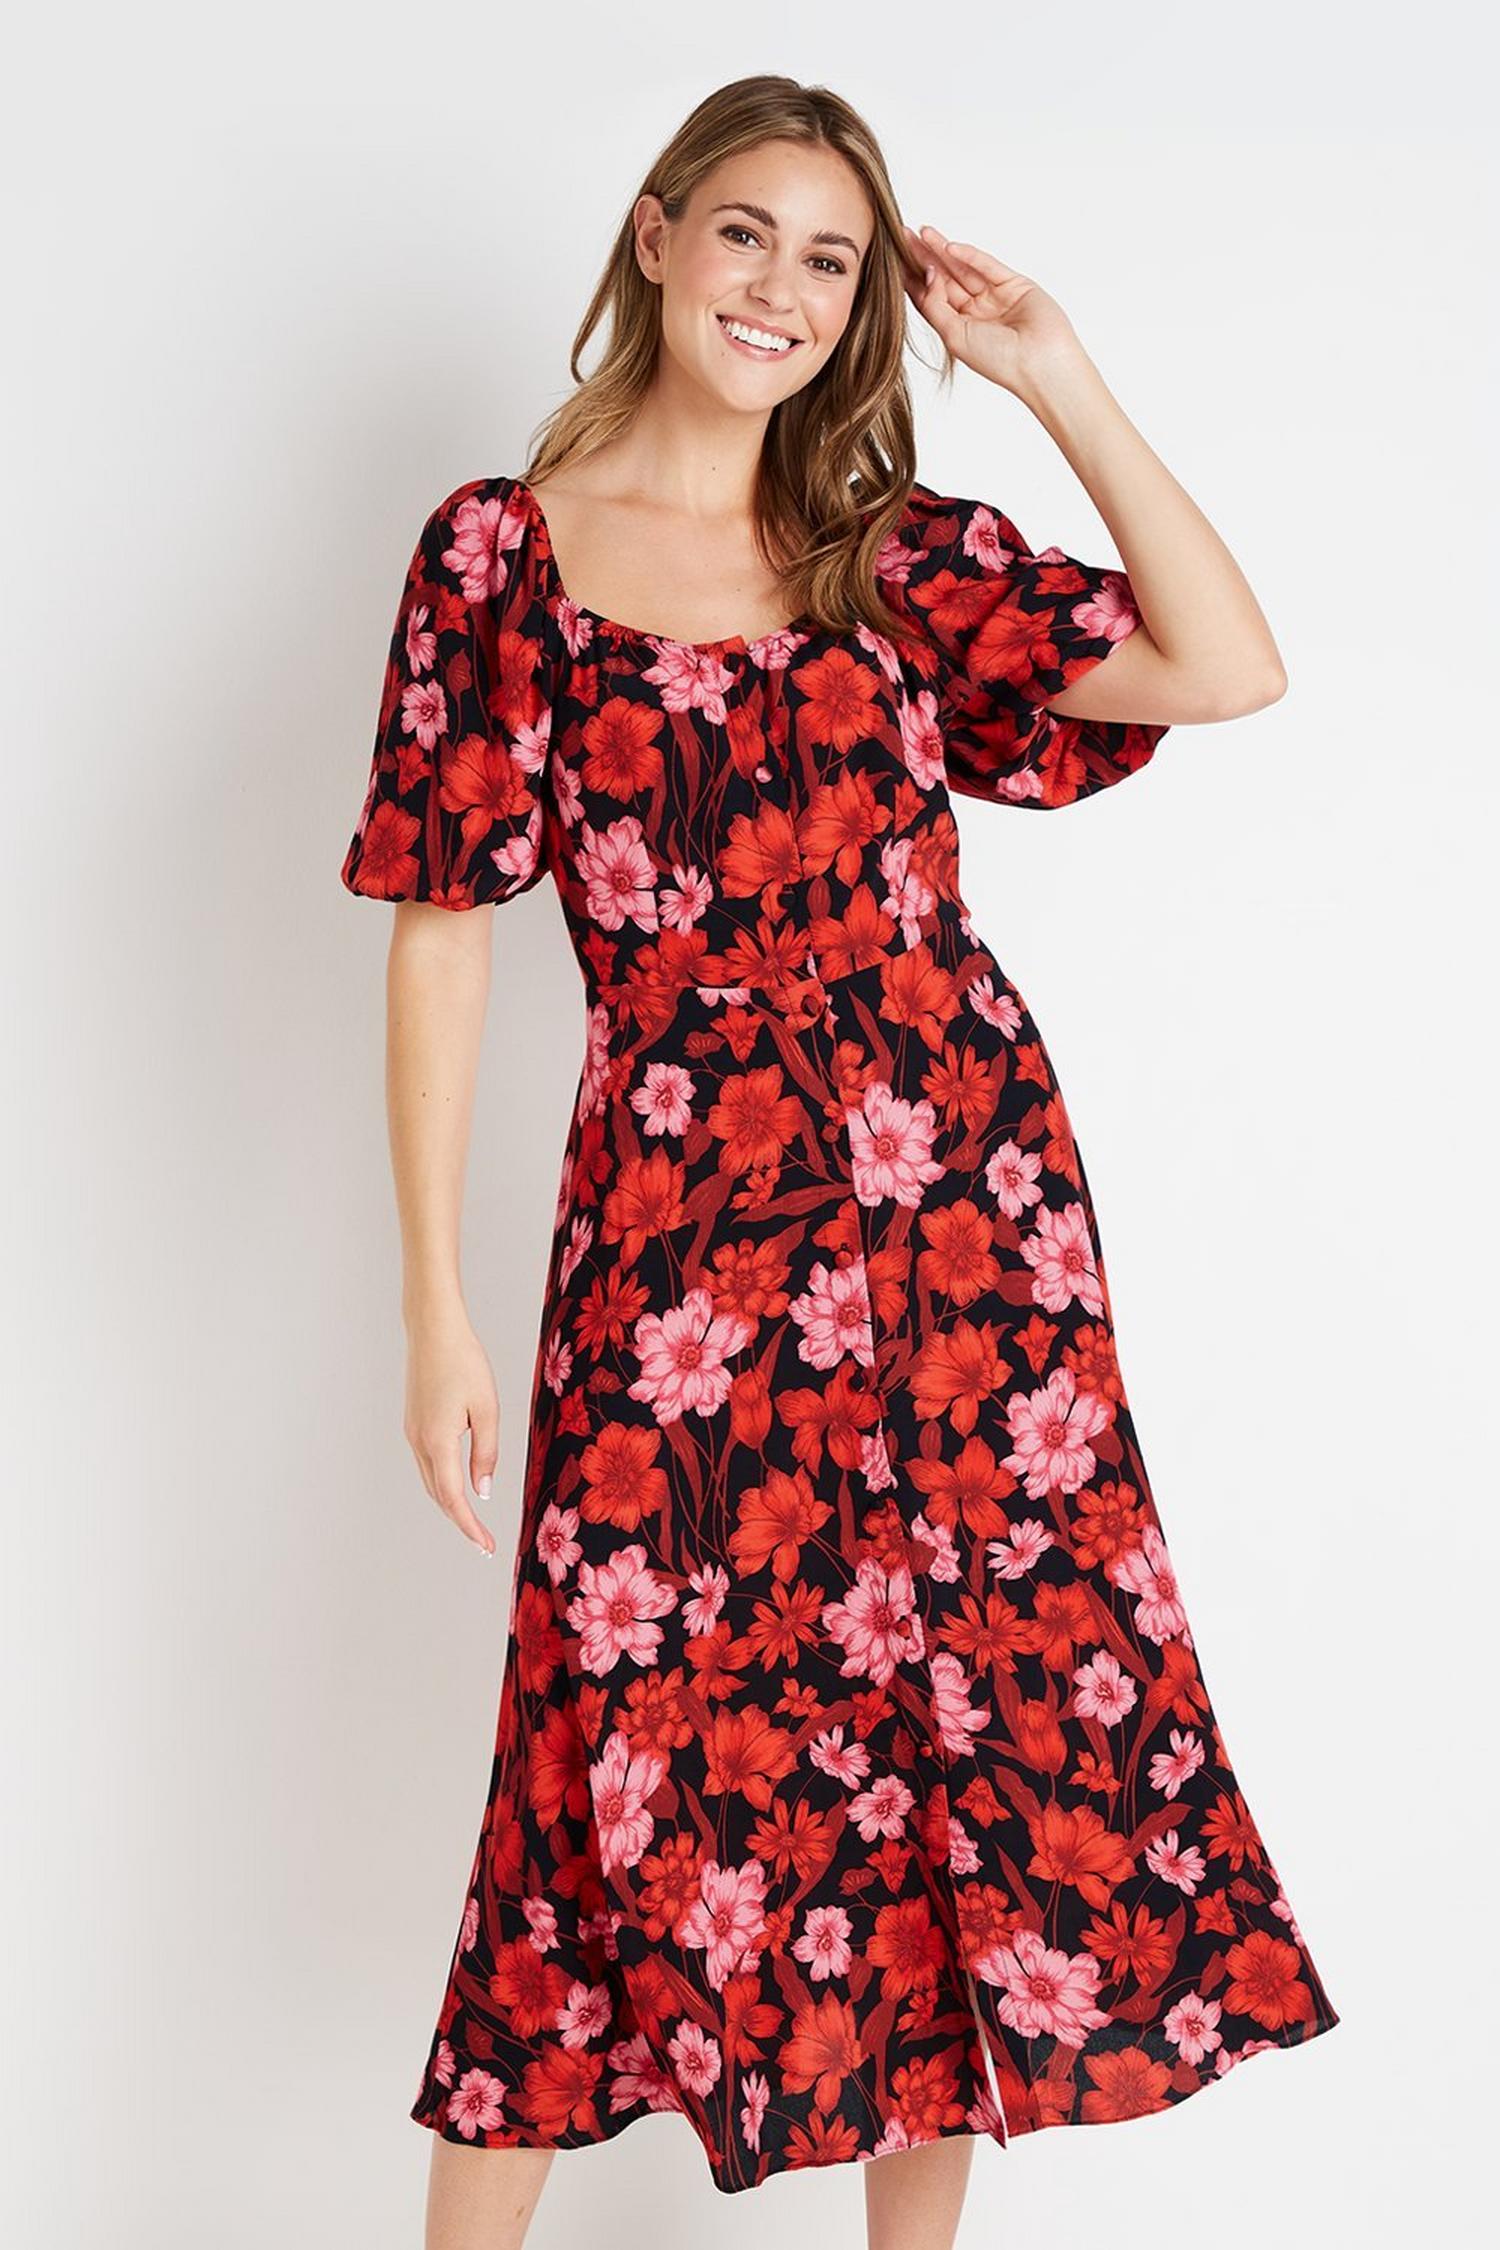 Black and Red Floral Square Neck Dress | Wallis UK